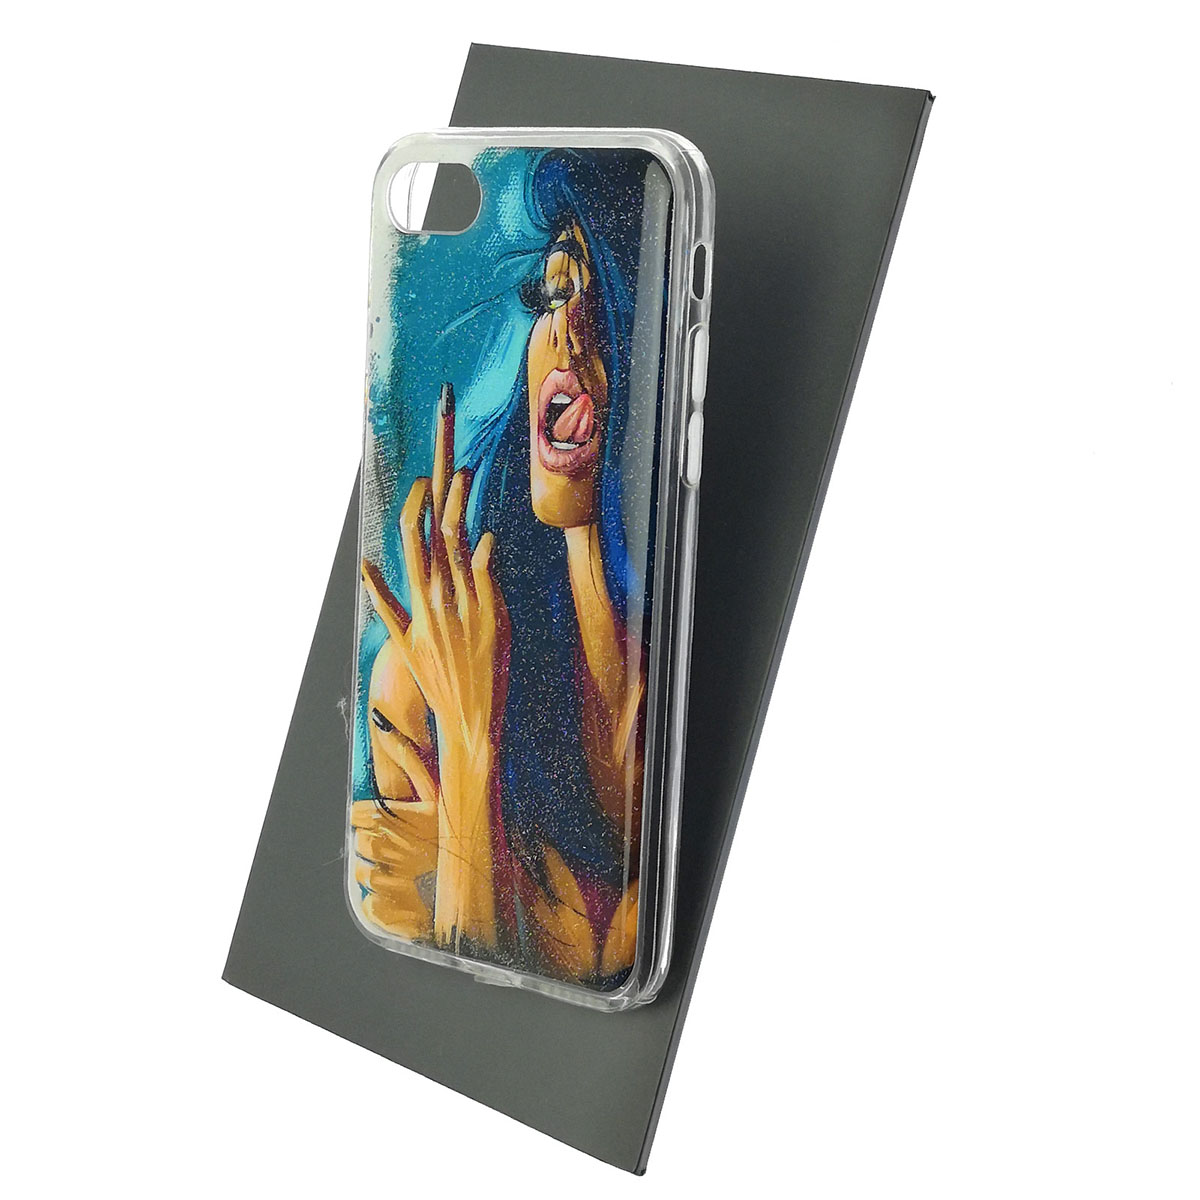 Чехол накладка для APPLE iPhone 7, iPhone 8, iPhone SE 2020, силикон, блестки, глянцевый, рисунок Девушка с синими волосами